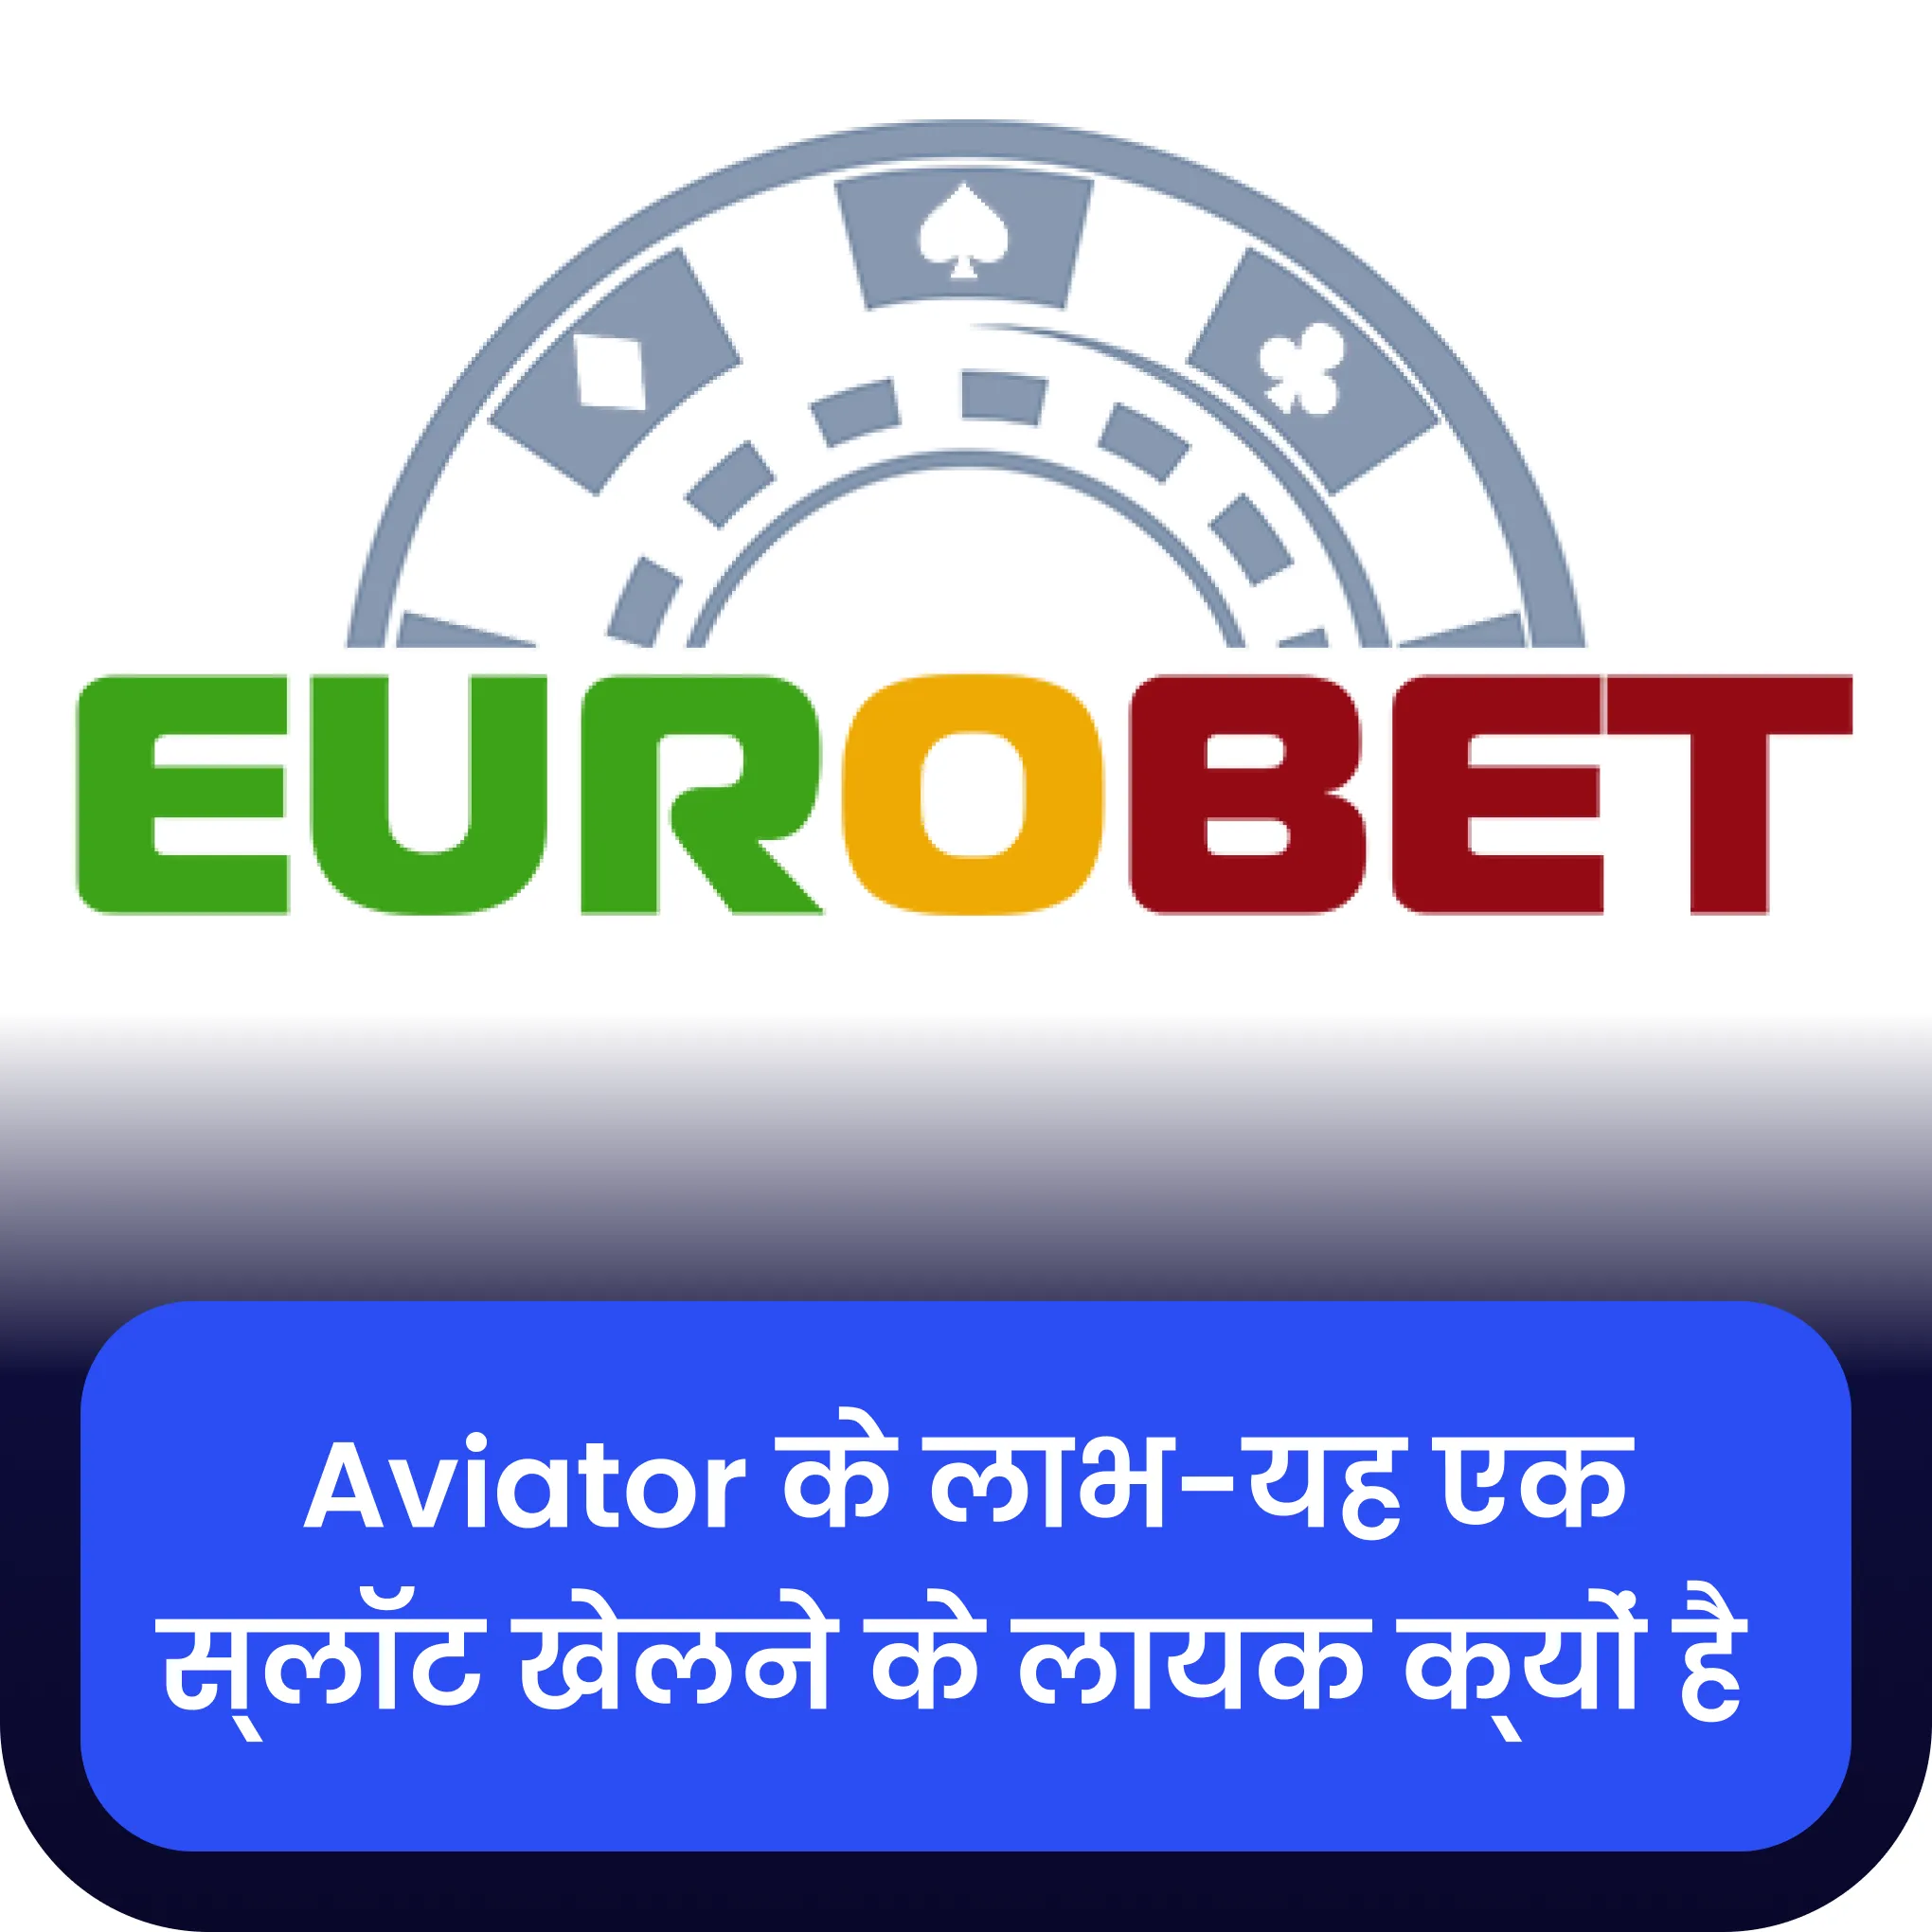 eurobet aviator के लाभ